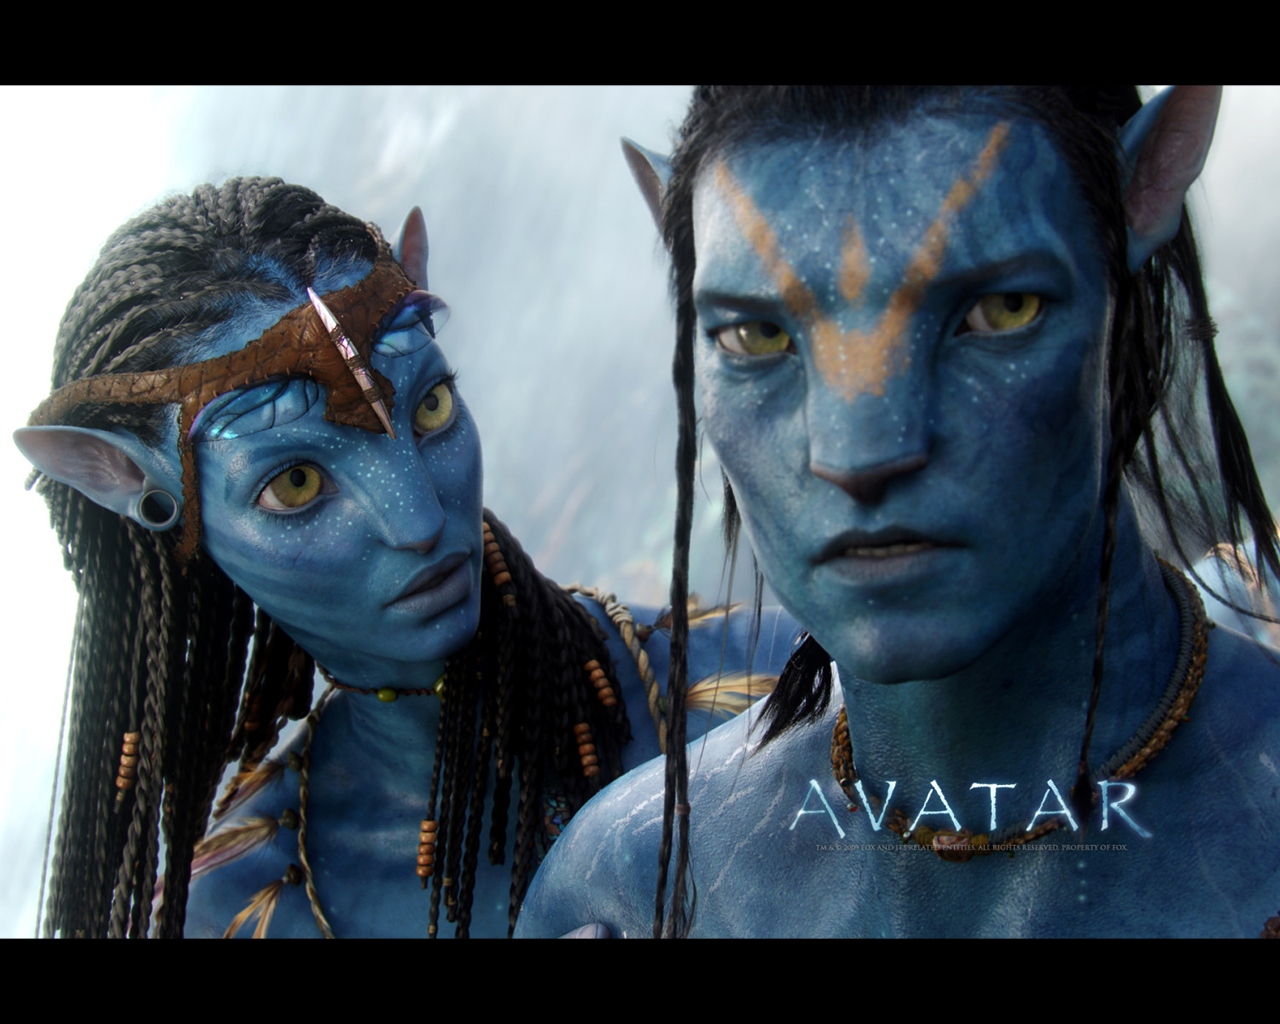 James Cameron's "Avatar" desktop wallpaper number 4 (1280 x 1024 pixels)